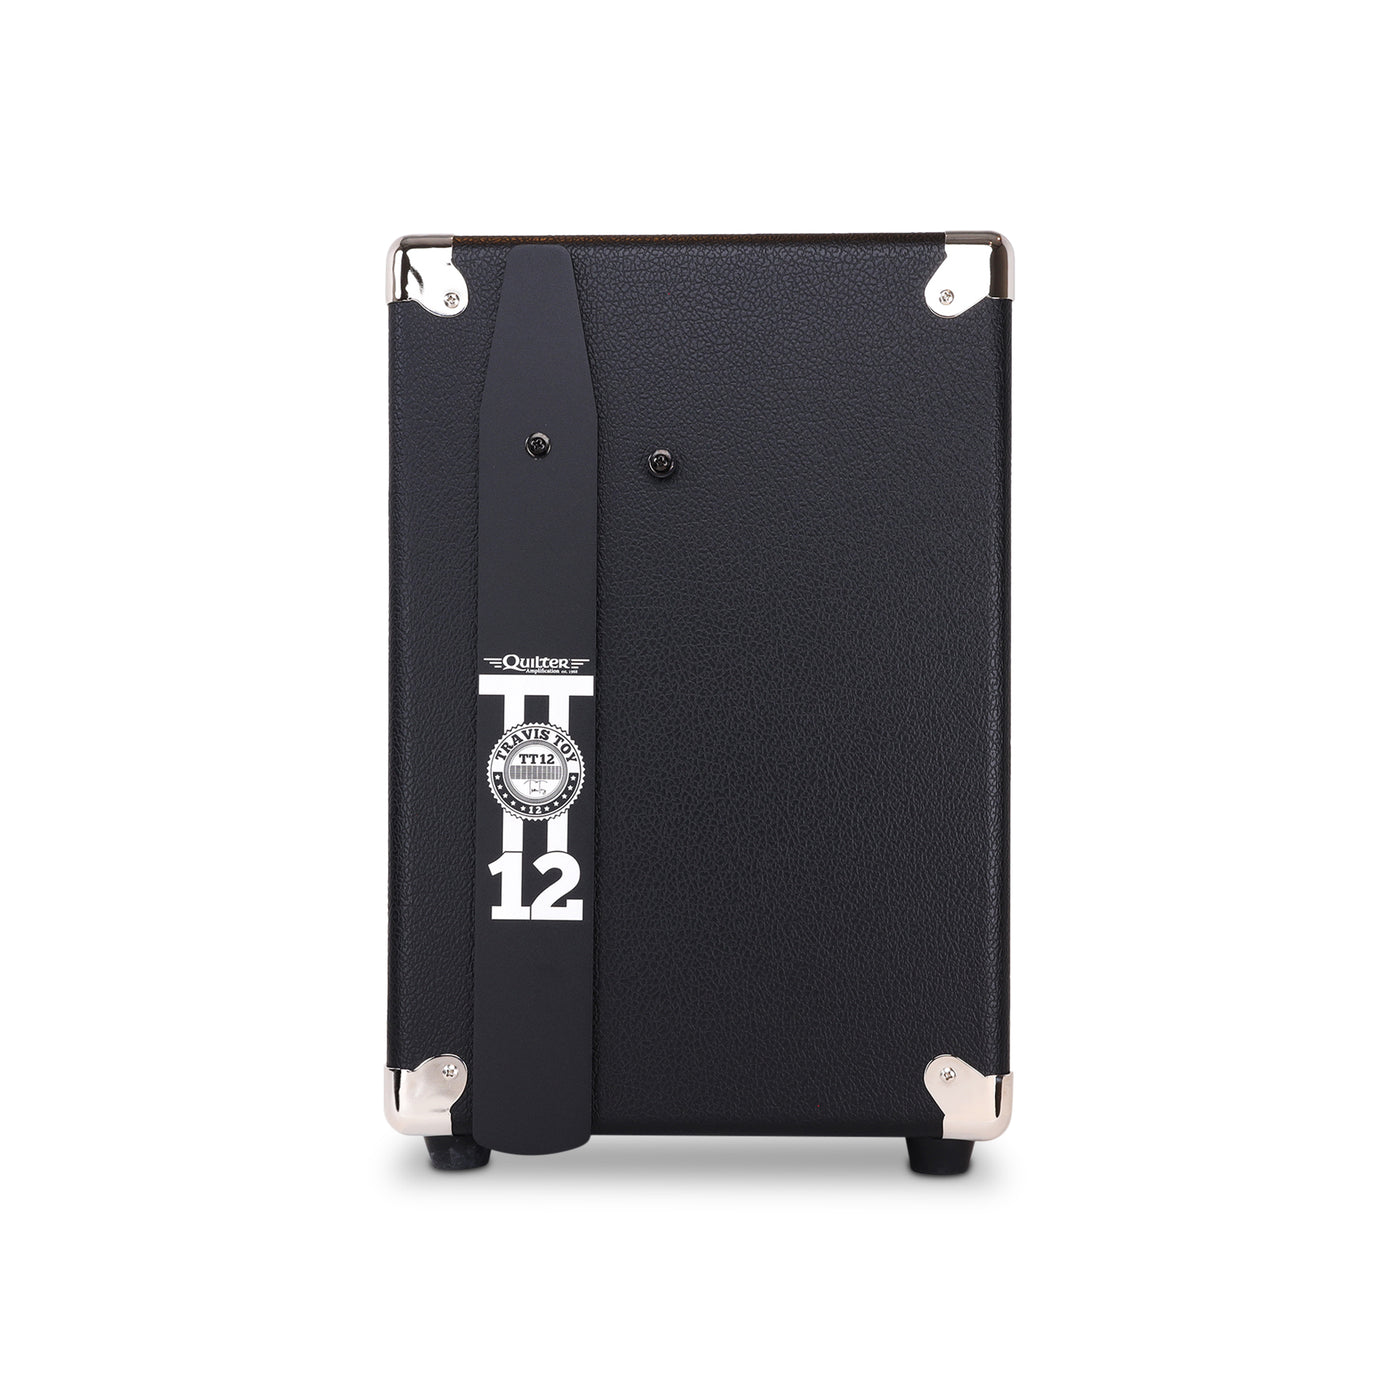 Travis Toy 12" Signature Edition Steel Guitar Amplifier